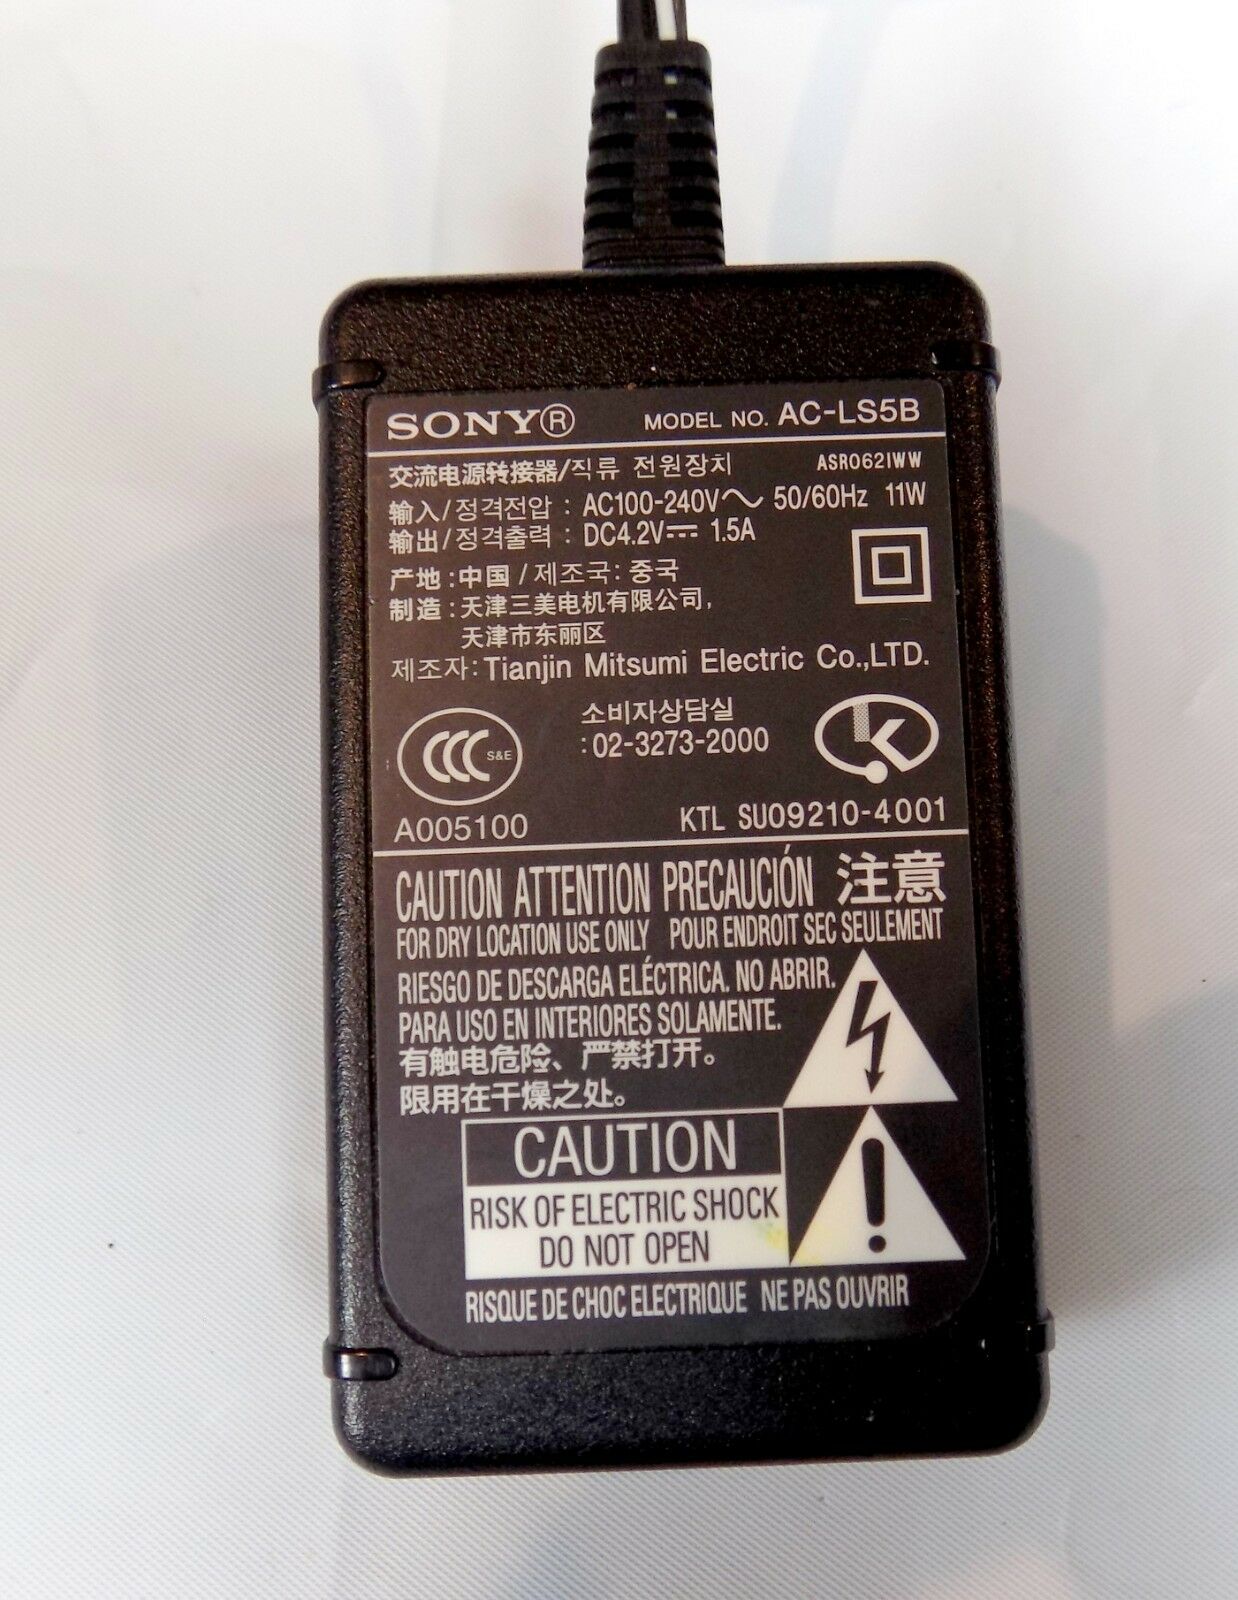 DC 4.2V 1.5A AC Adapter Power Supply For Sony AC-LS5 AC-LS5A AC-LS5B